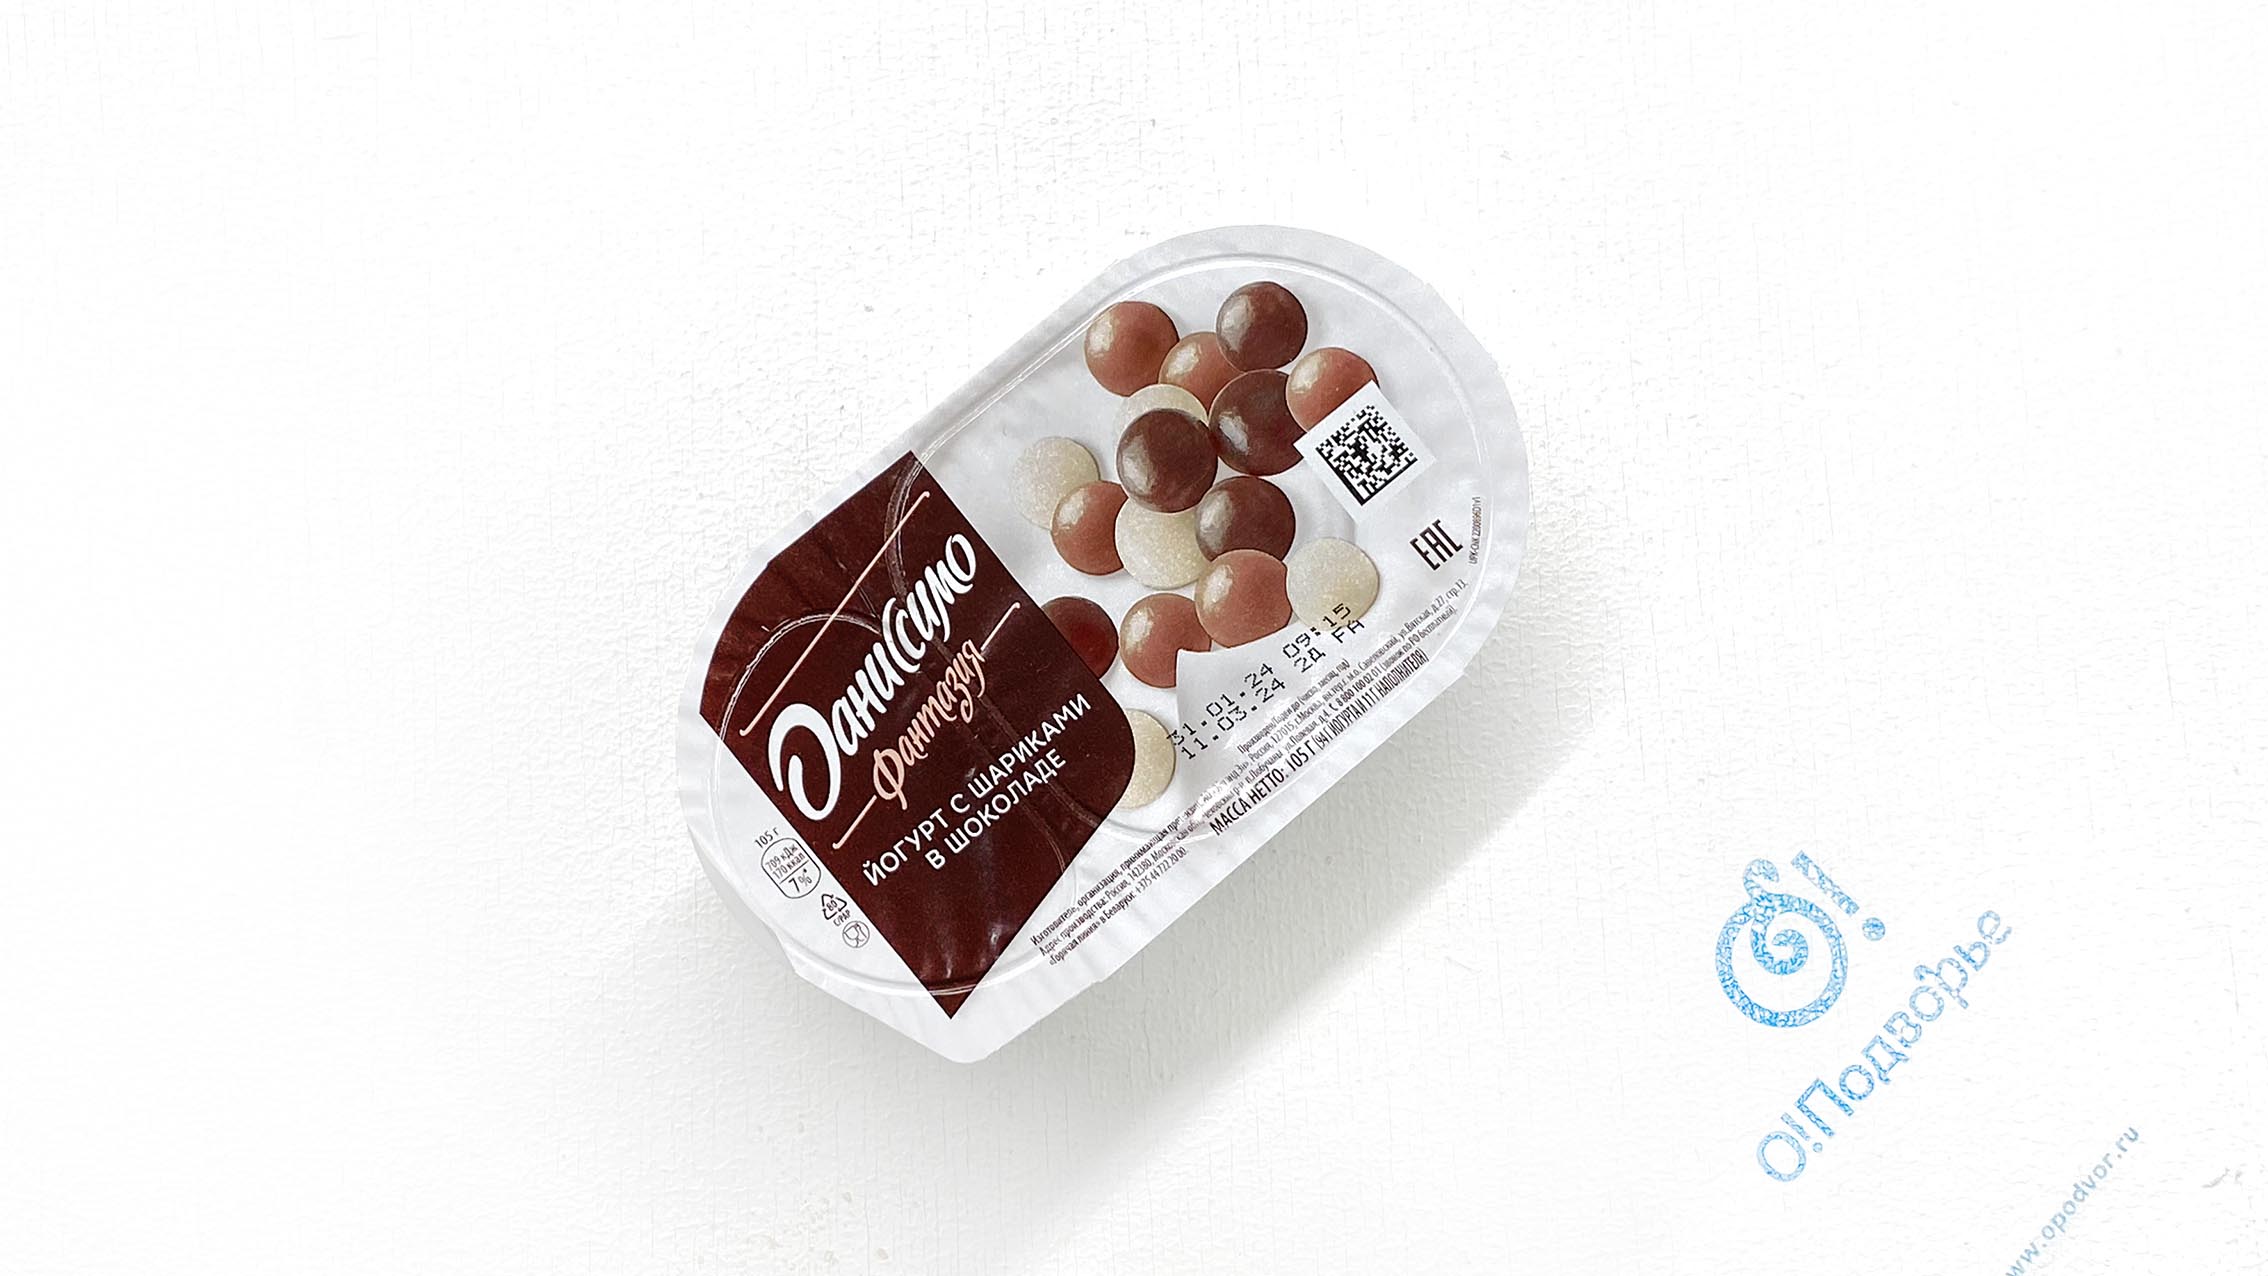 Йогурт с шариками в шоколаде "Даниссимо фантазия", АО "Эич энд Эн", 105 грамм, (Зл) 